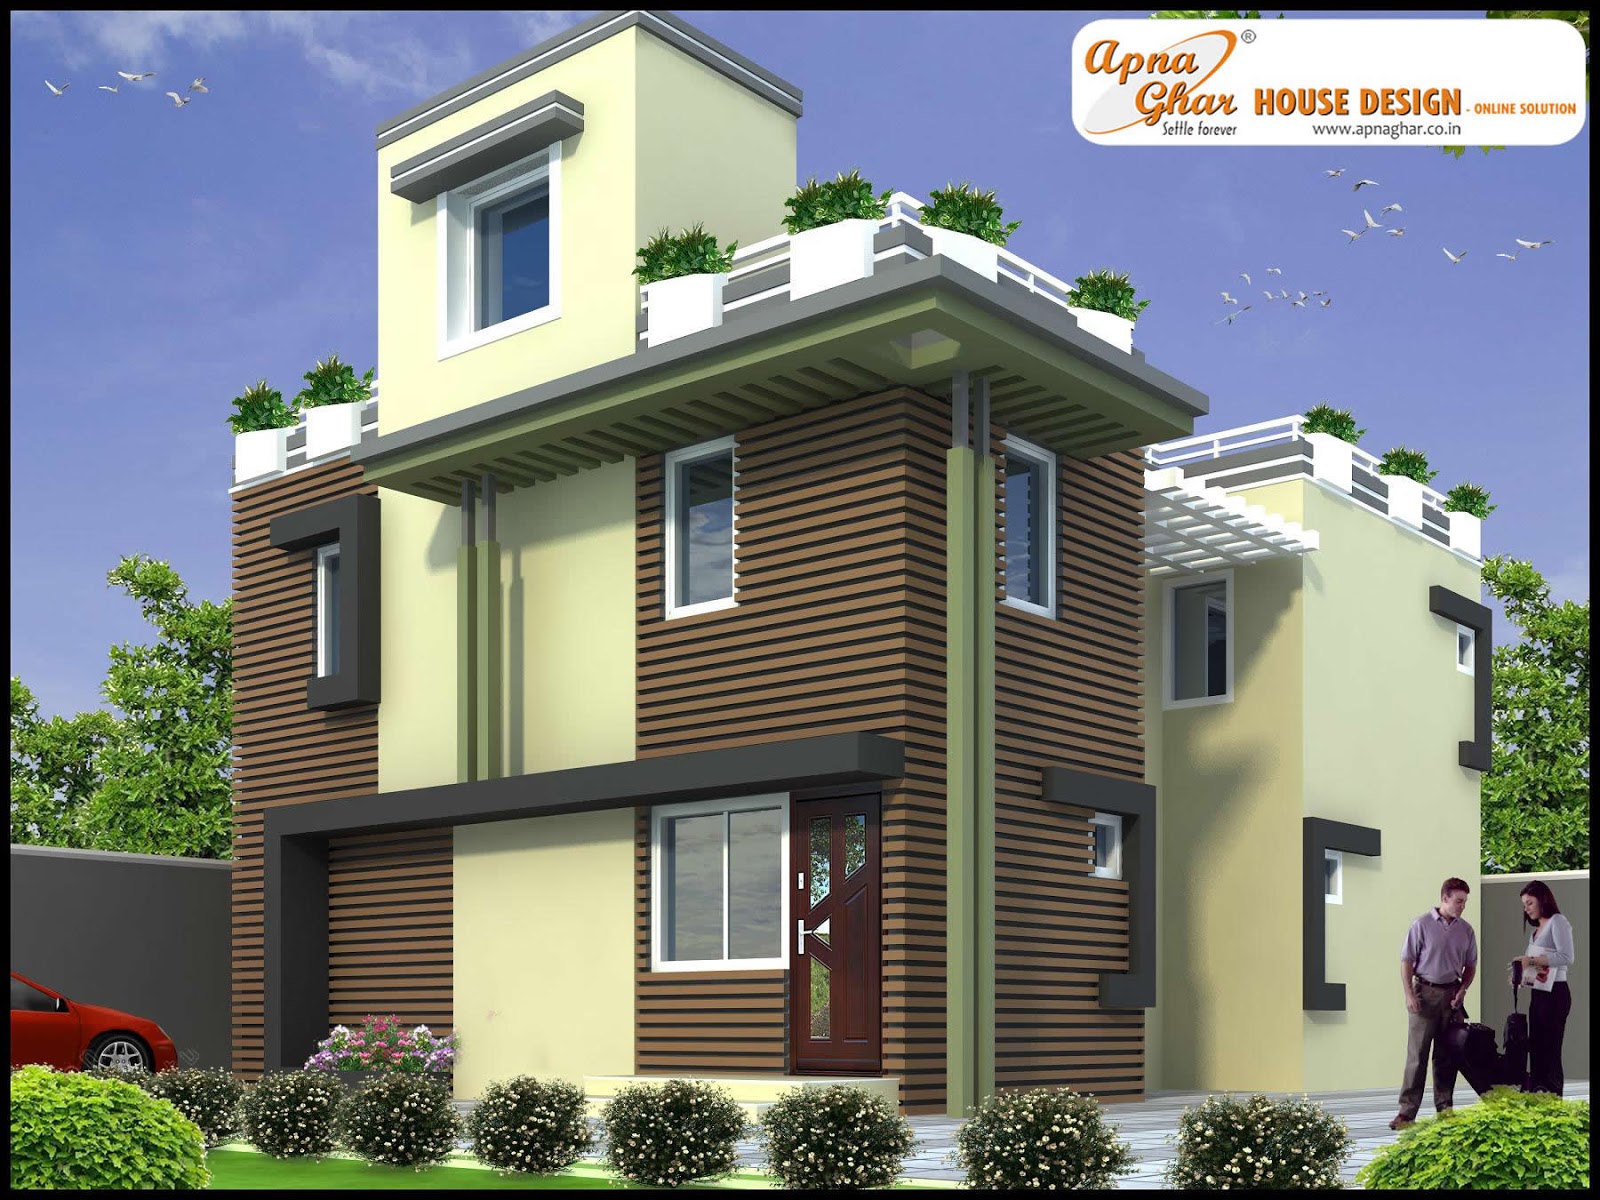 Duplex House Design Apnaghar House Design Page 4